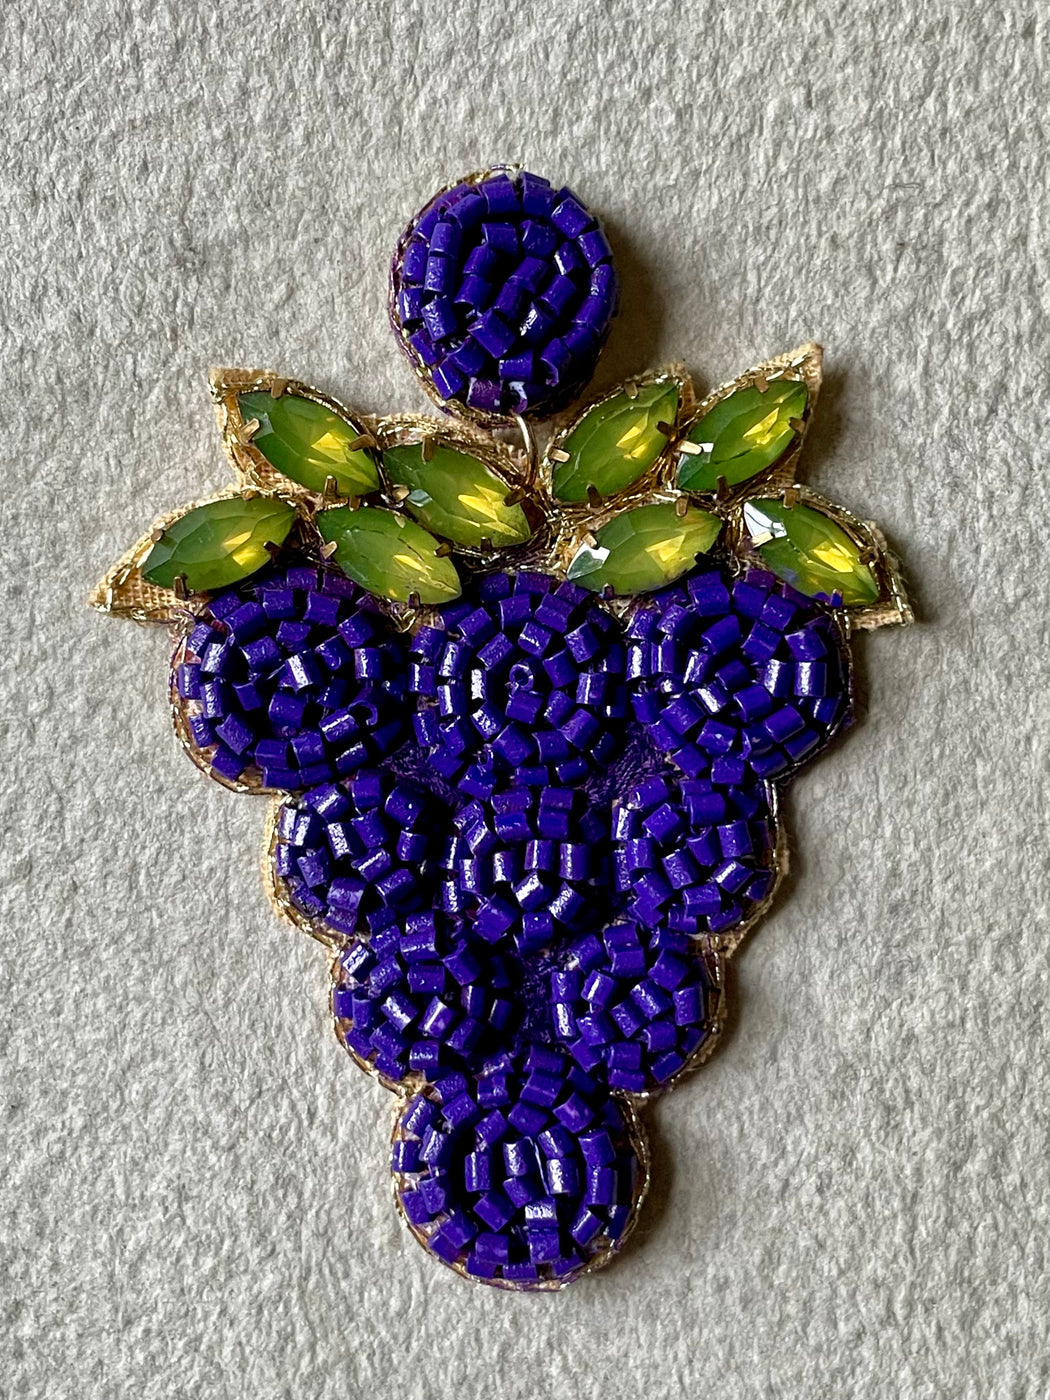 "Grapes" Seed Bead Earrings